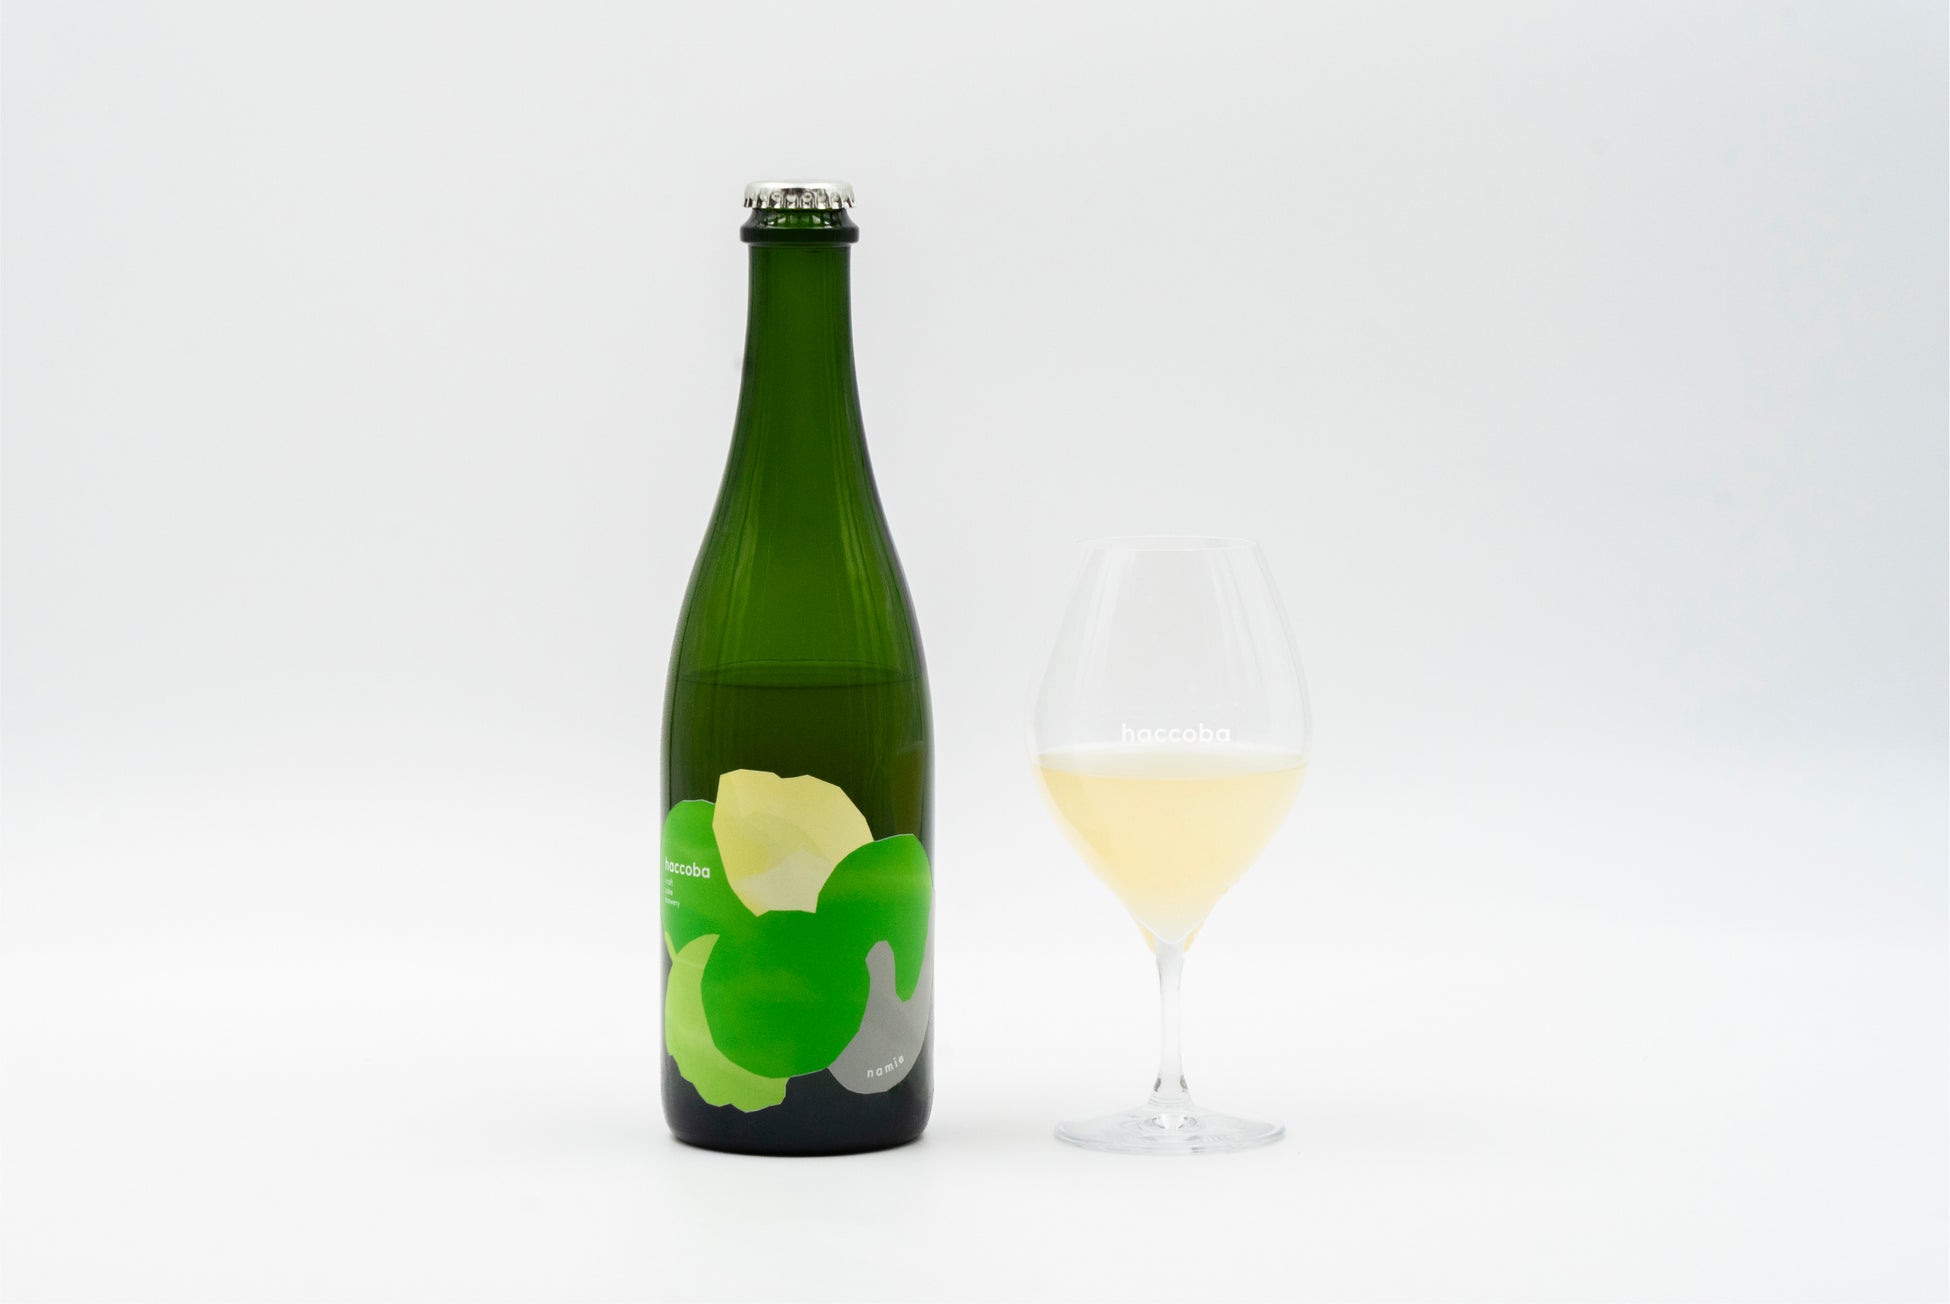 haccobaの2つ目の醸造所が福島県・浪江町に誕生。1stロットのお酒「試験醸造酒 -namie-」とオリジナルグラスのお祝いセットを8月29日より数量限定販売。